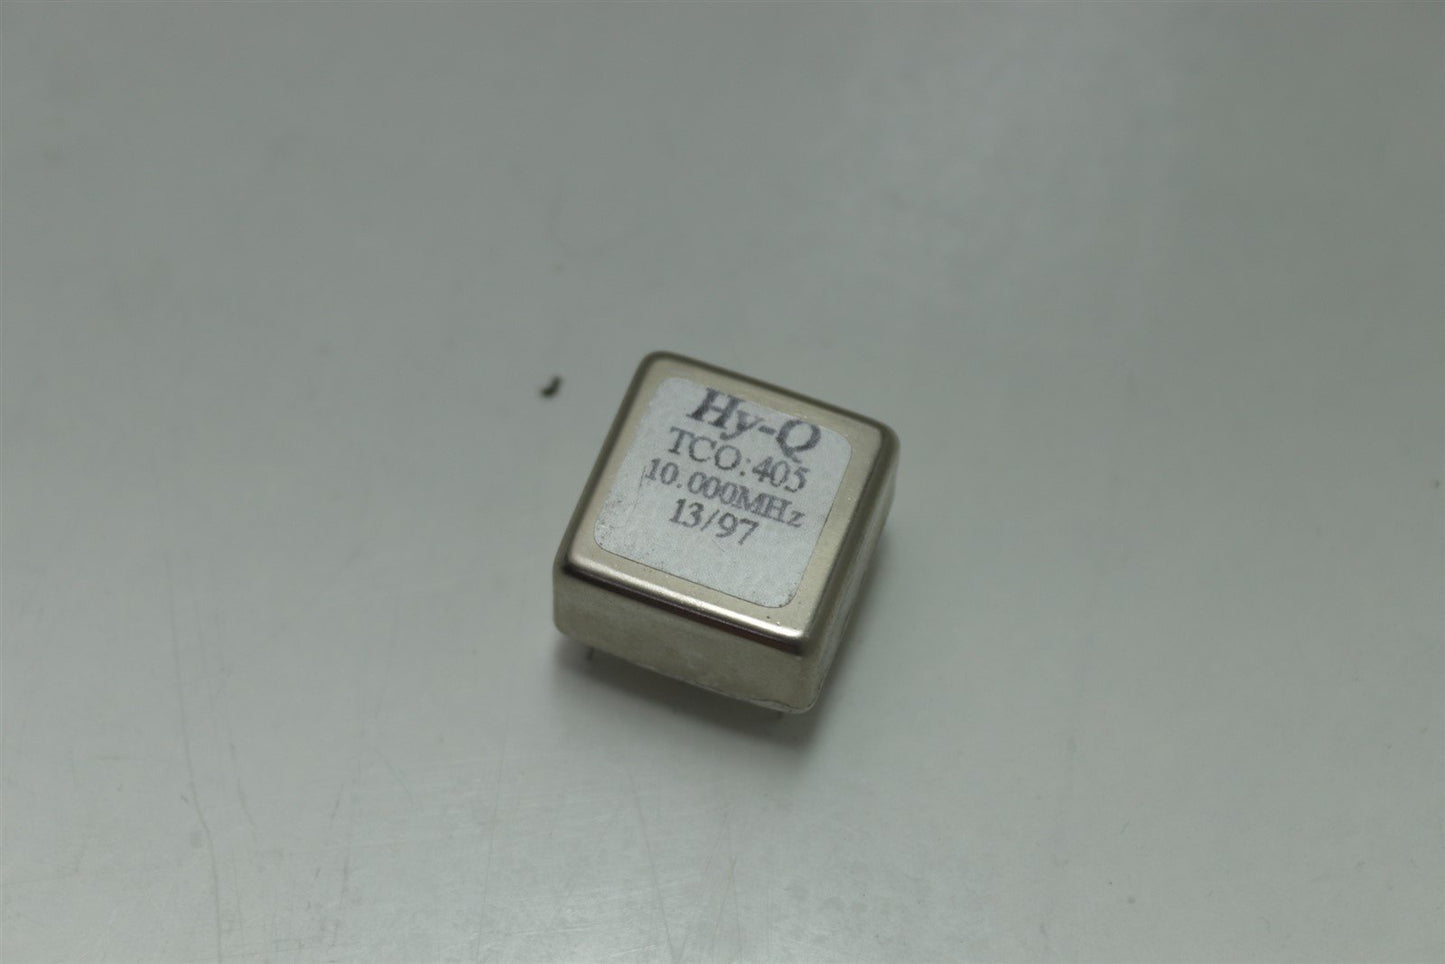 Hy-Q RF Precision Crystal Oscillator 10.000 MHz GPS OCXO TCO-405 TESTED GOOD